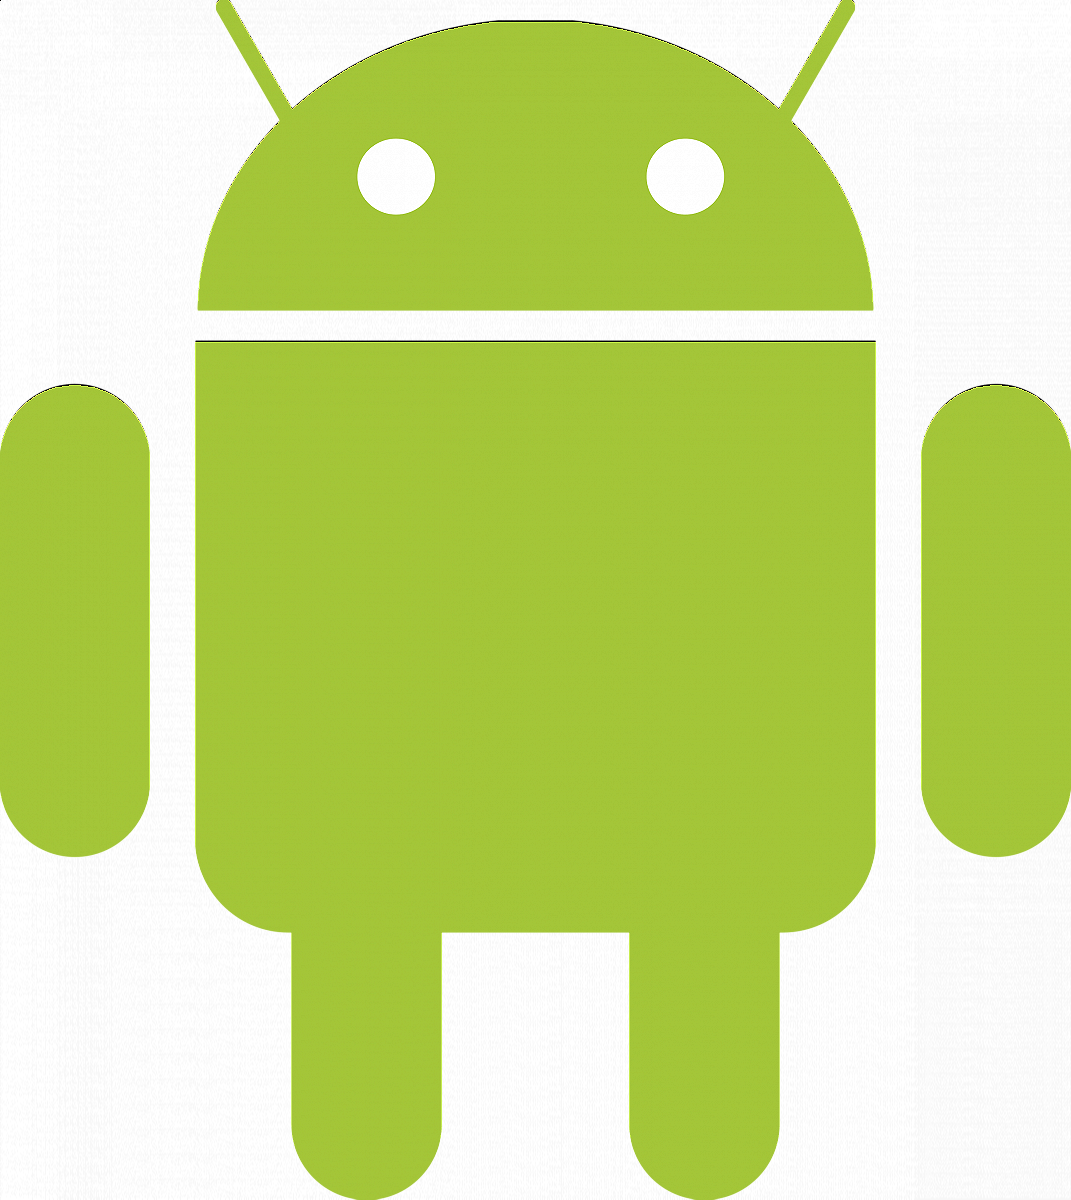 Android_logo_transparent.png [91.15 KB]